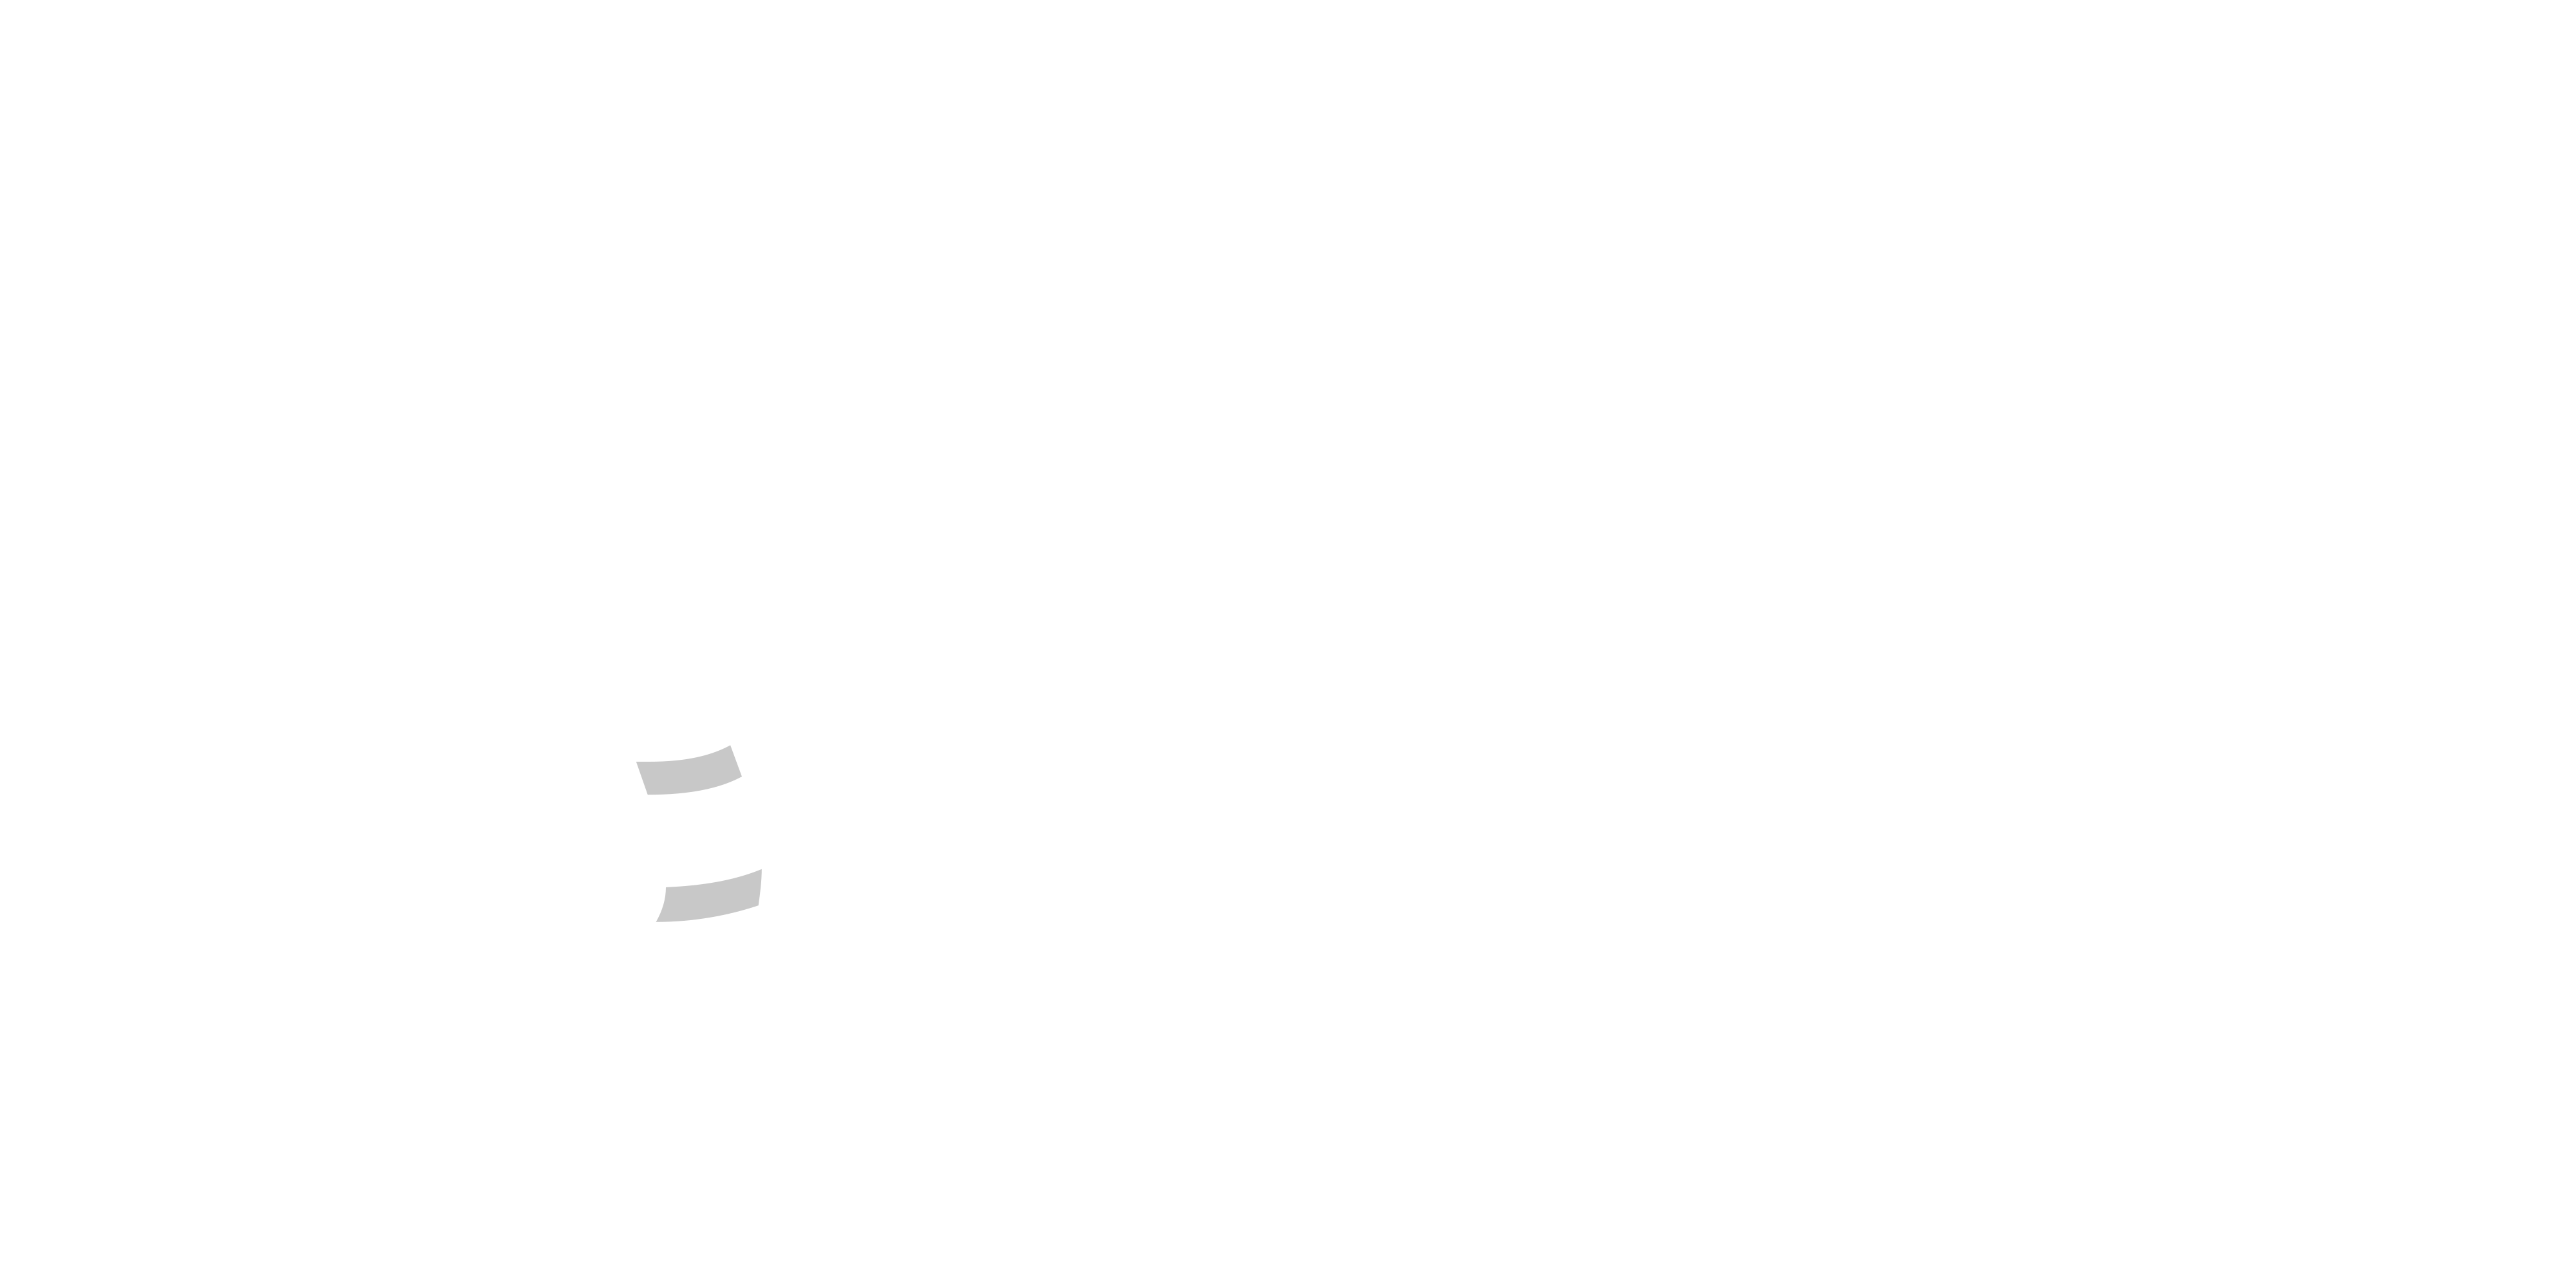 Logo de Ada